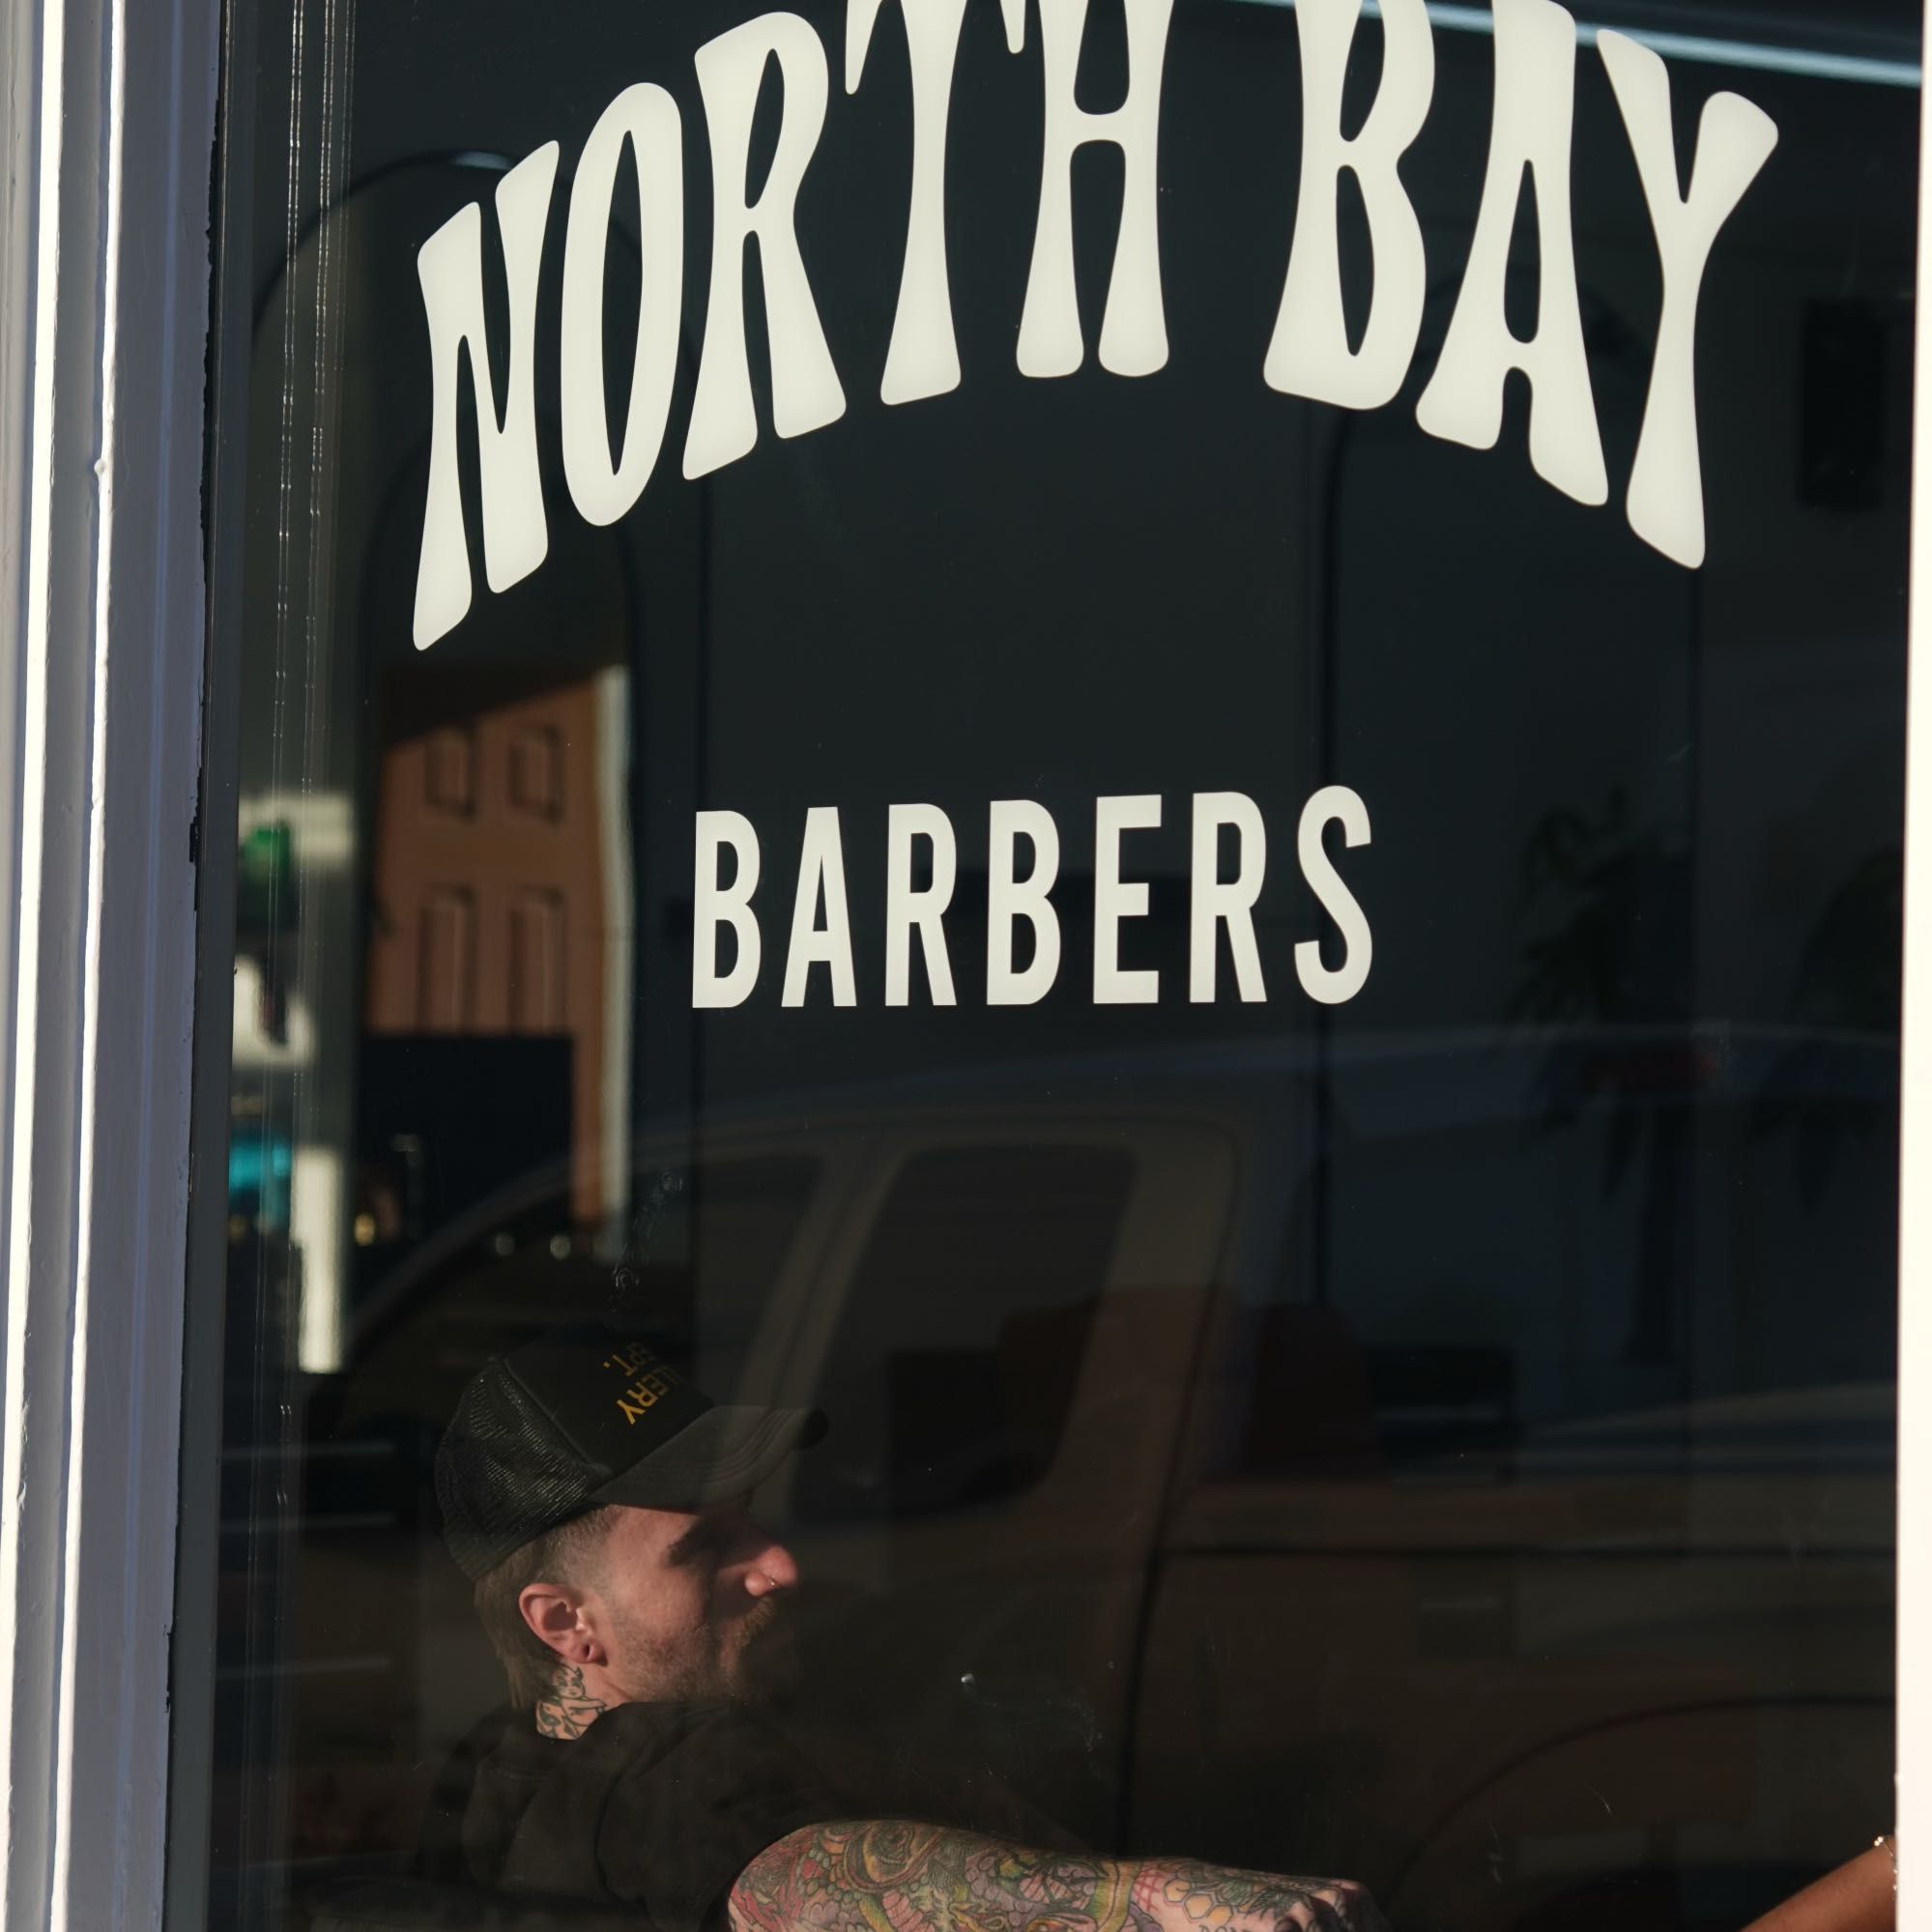 Andrew Bahno - North Bay Barbers, 602 Wilson Street, Santa Rosa, 95401